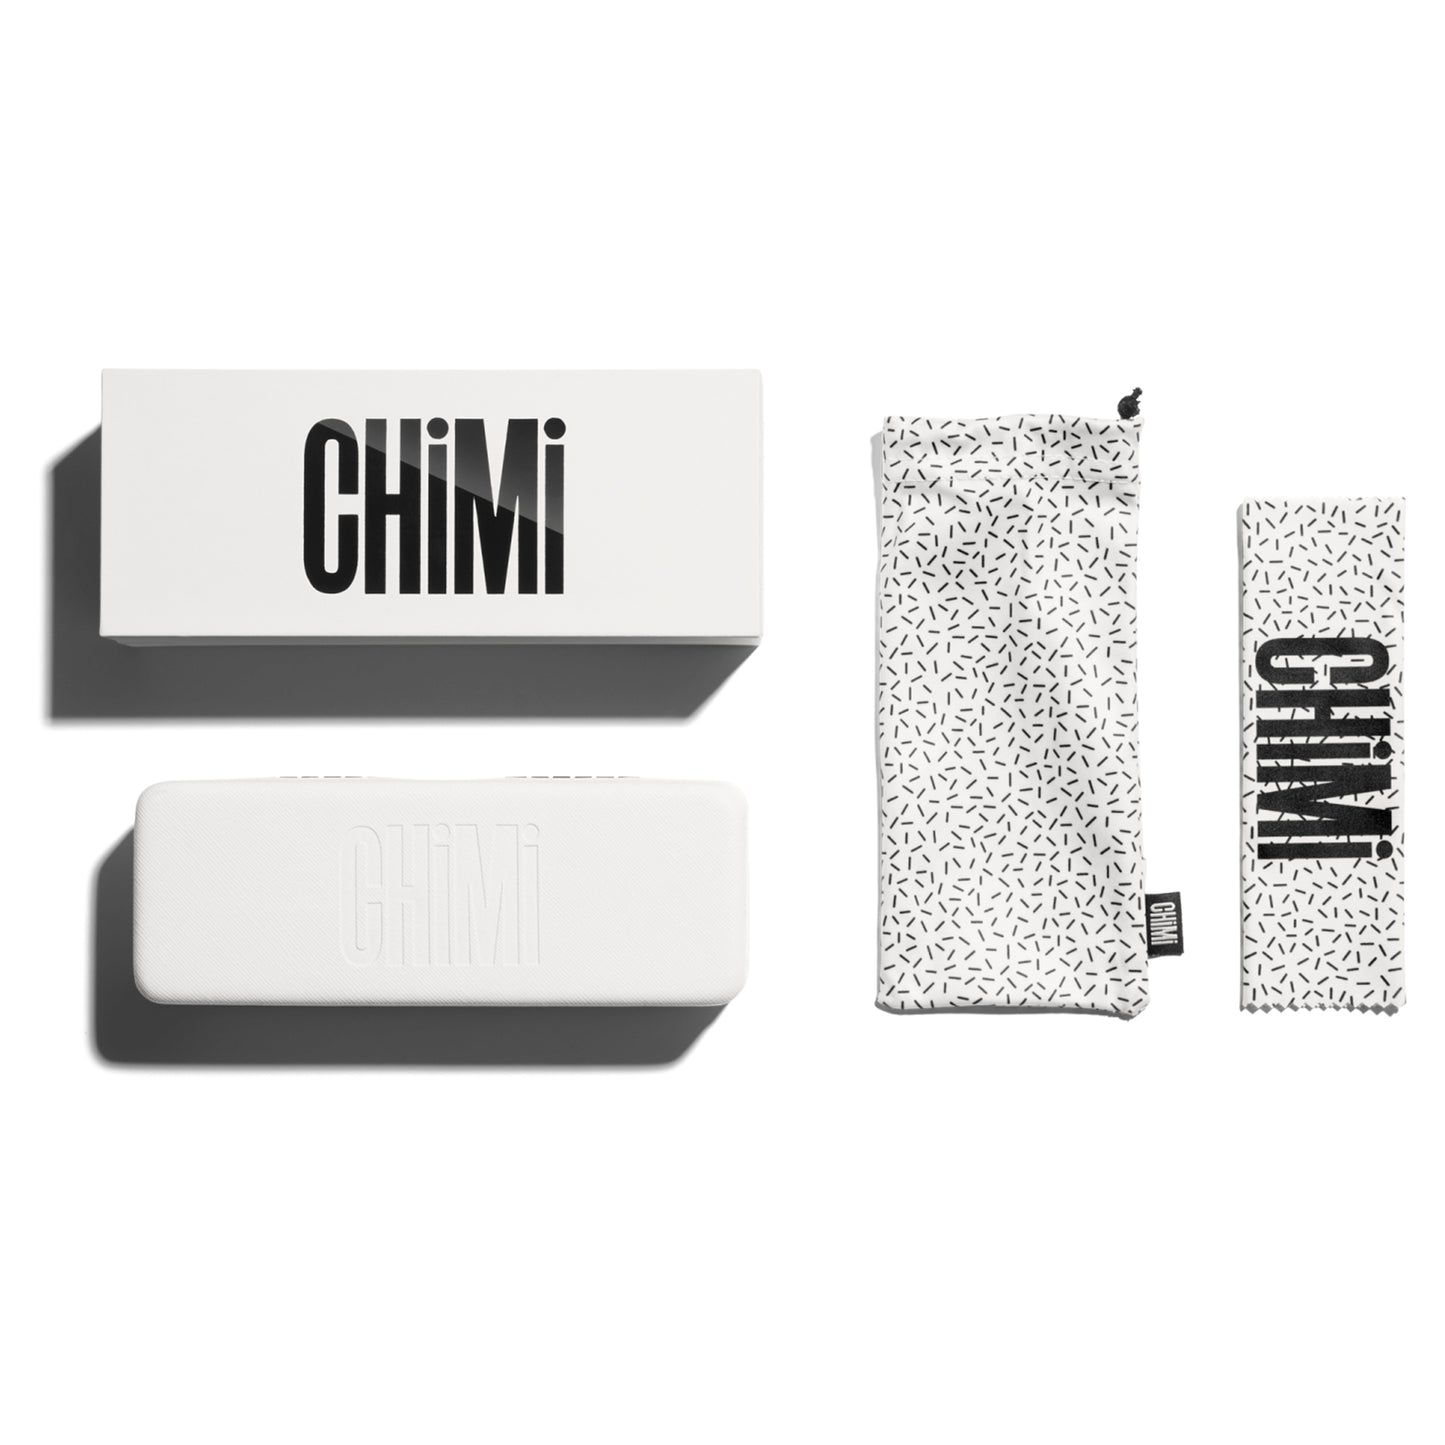 Chimi 001 Berry Black Eyewear Packaging